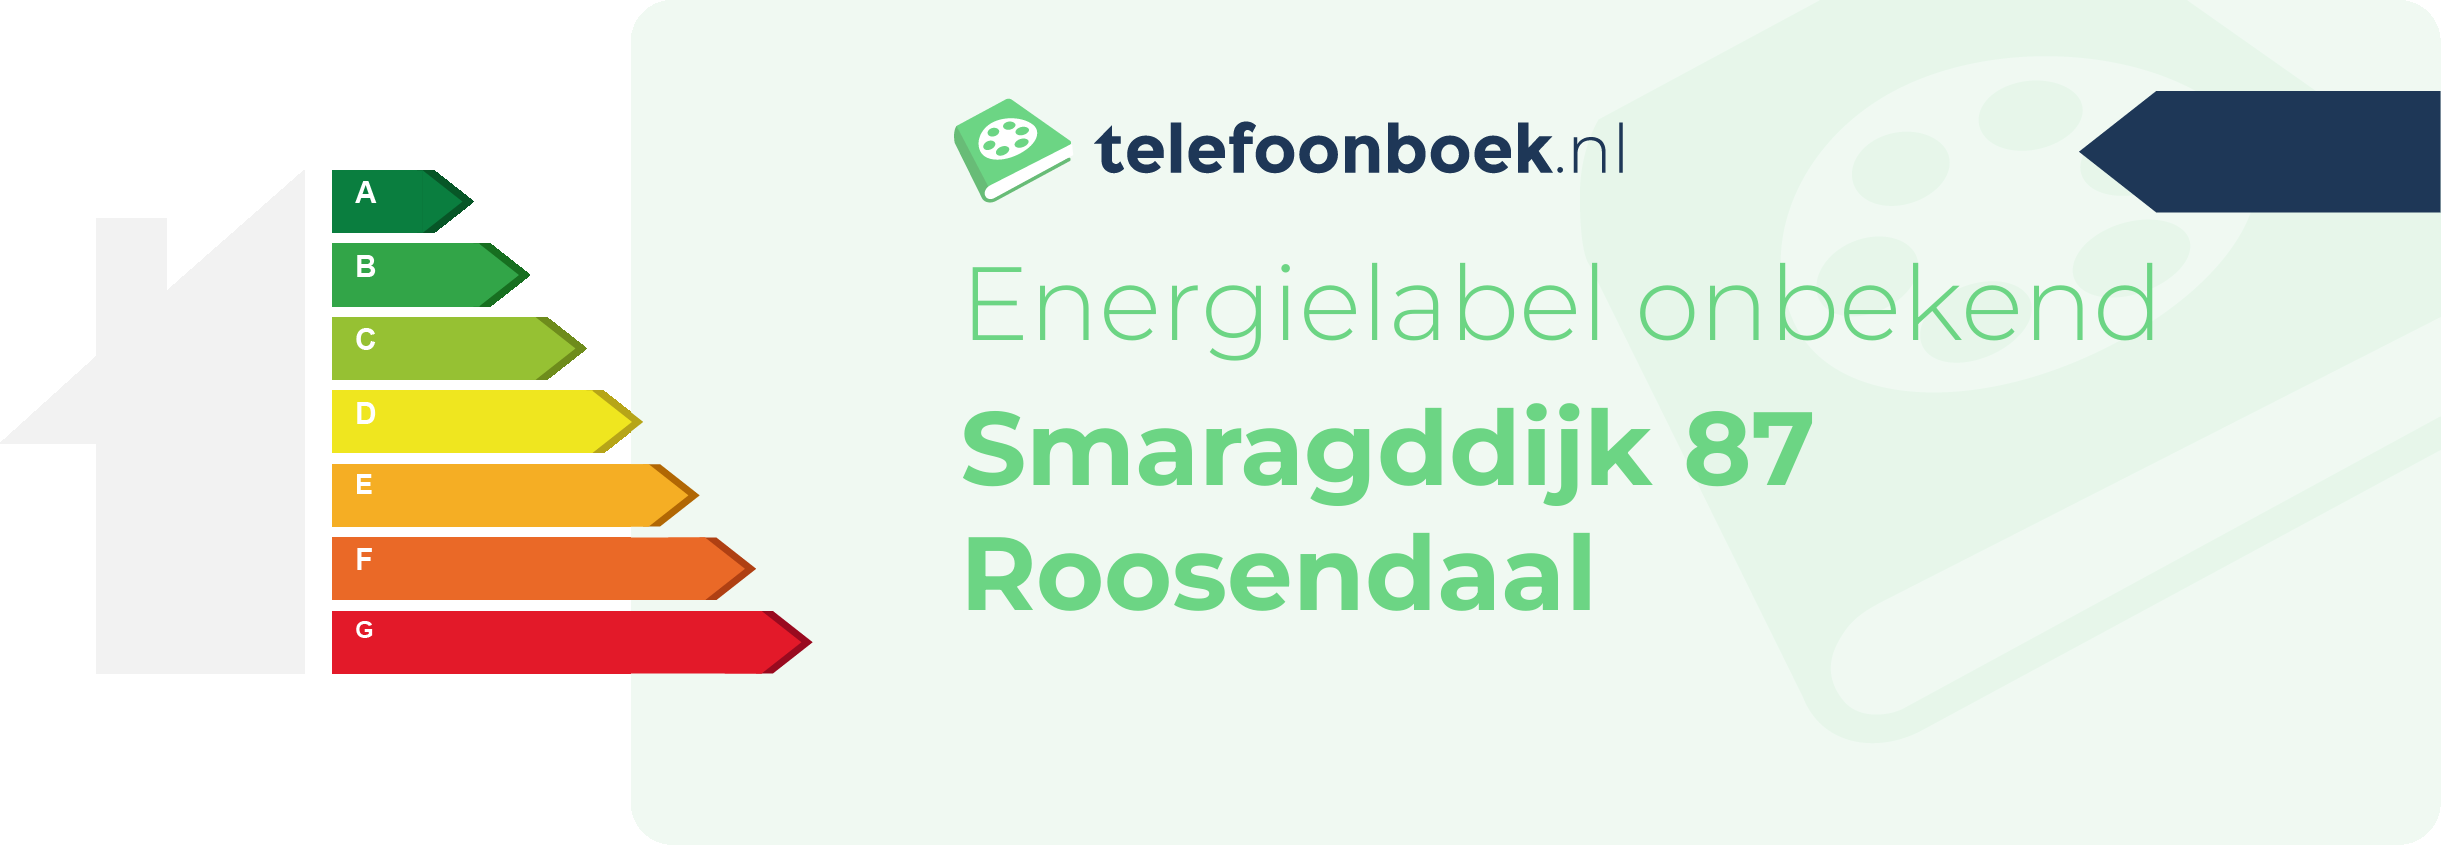 Energielabel Smaragddijk 87 Roosendaal